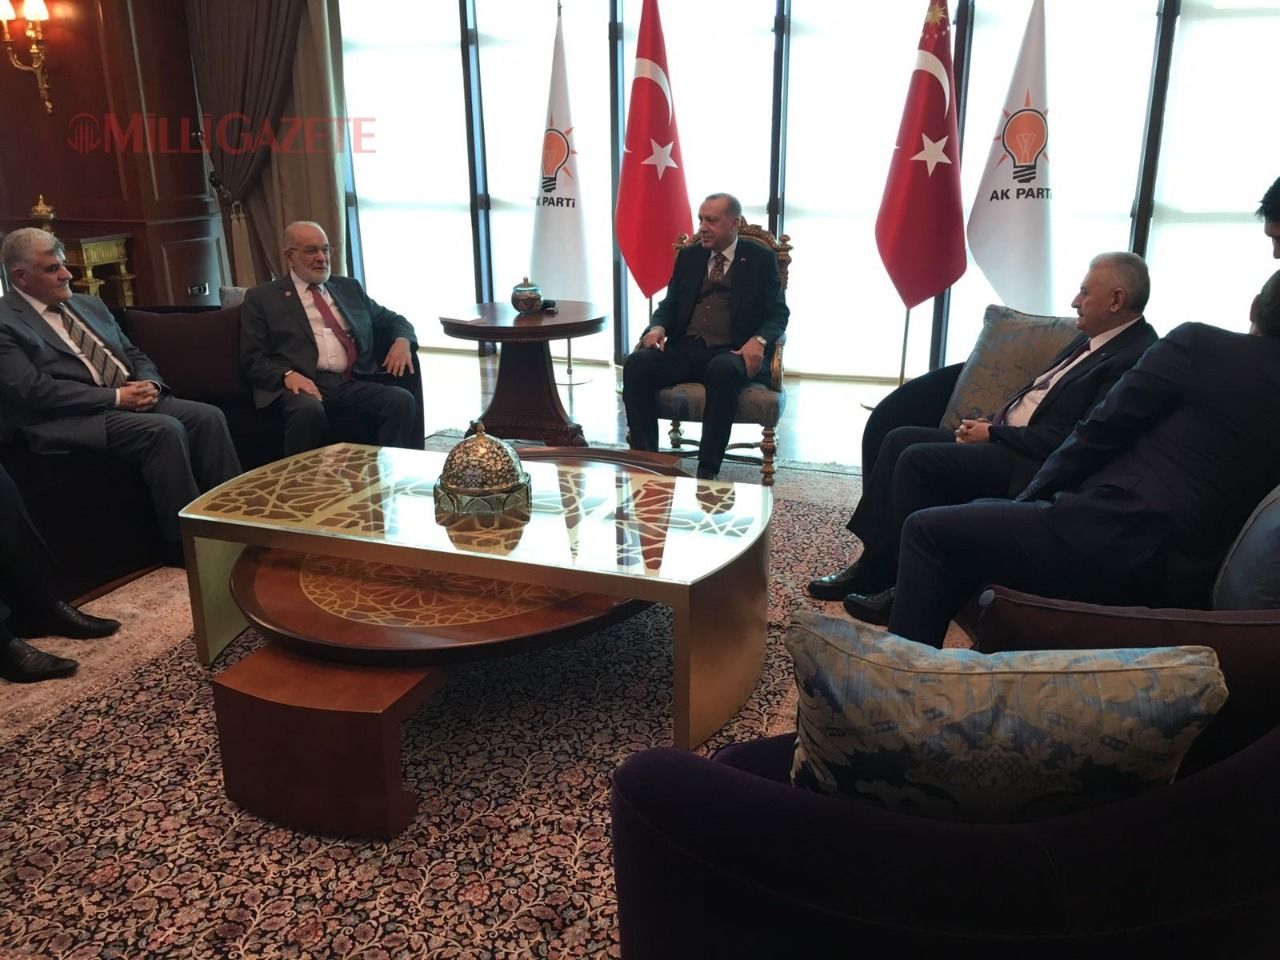 Saadet Party leader Karamollaoglu meets President Erdogan